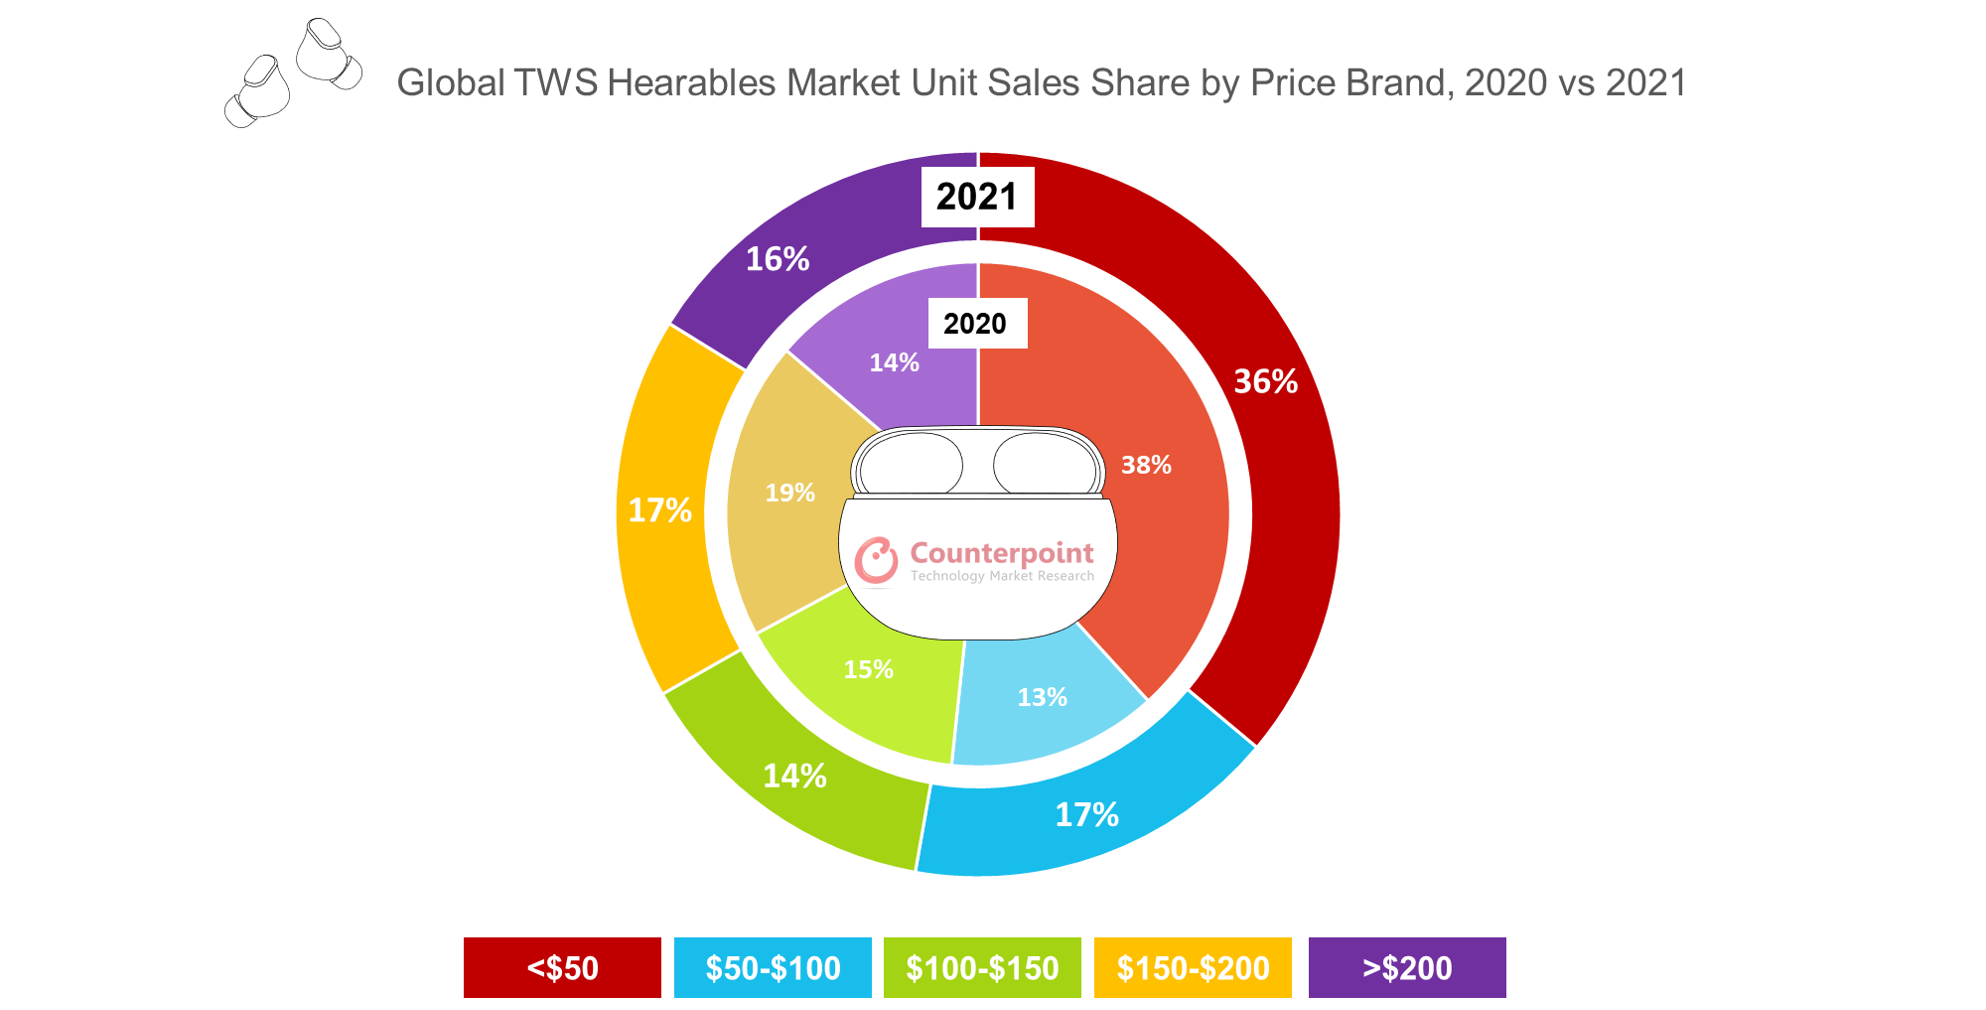 Counterpoint Research全球TWS听力市场单位单位销售份额按价格品牌，2020与2021